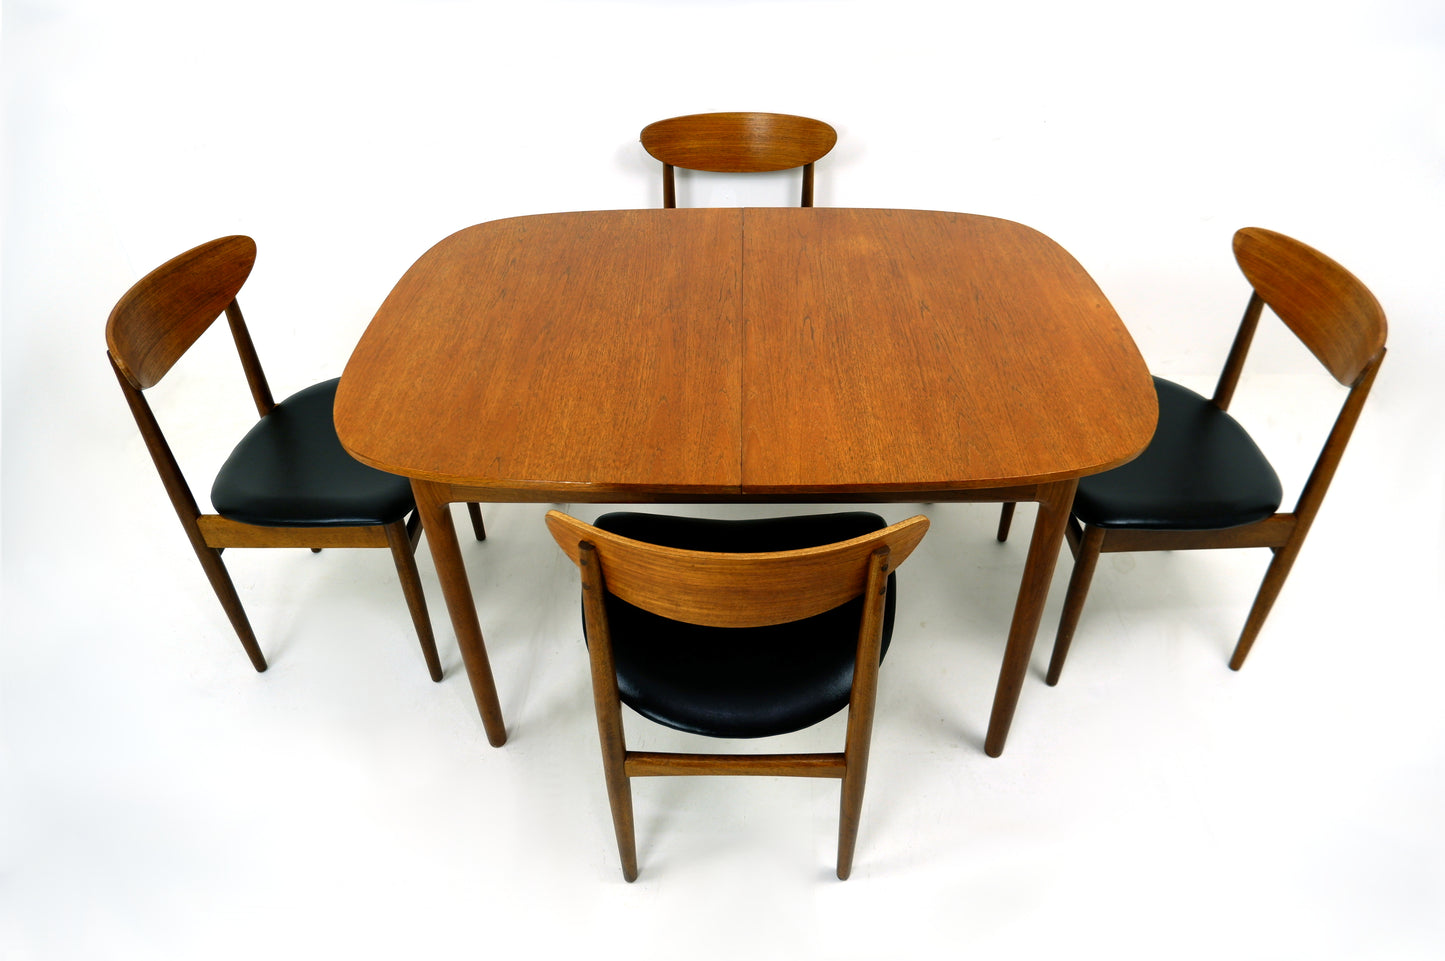 Vintage G PLAN Teak Dining Table - Danish Range by Kfod Larsen - Mid Century Modern